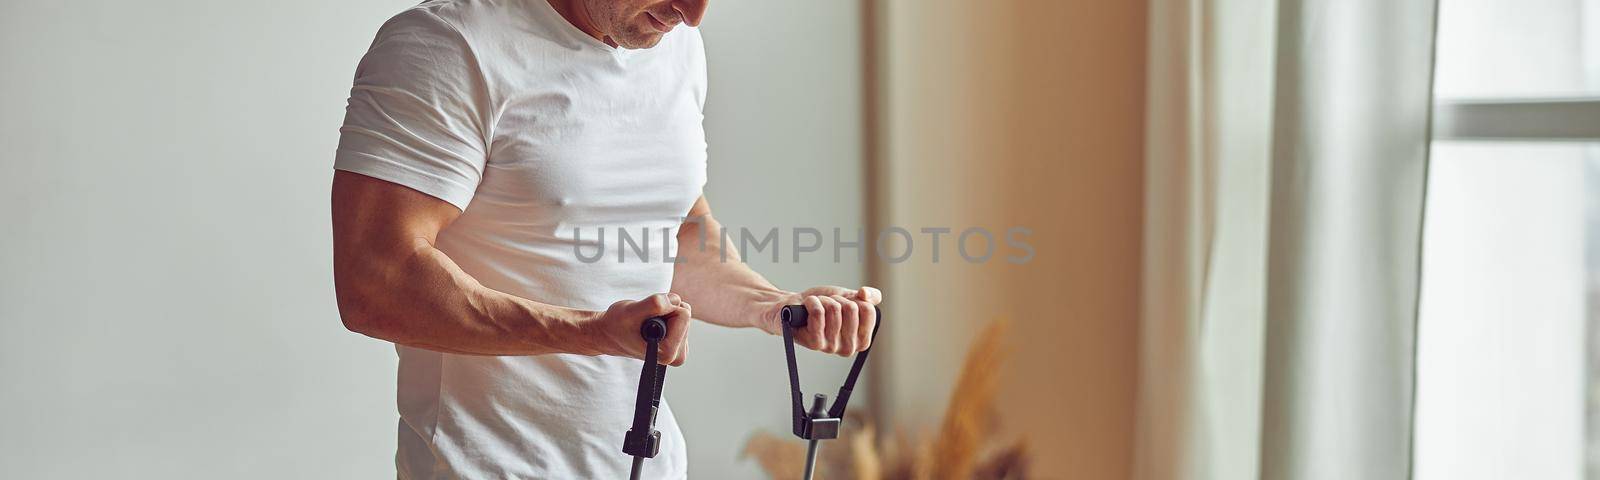 Athletic man doing domestic training with eqipment by Yaroslav_astakhov